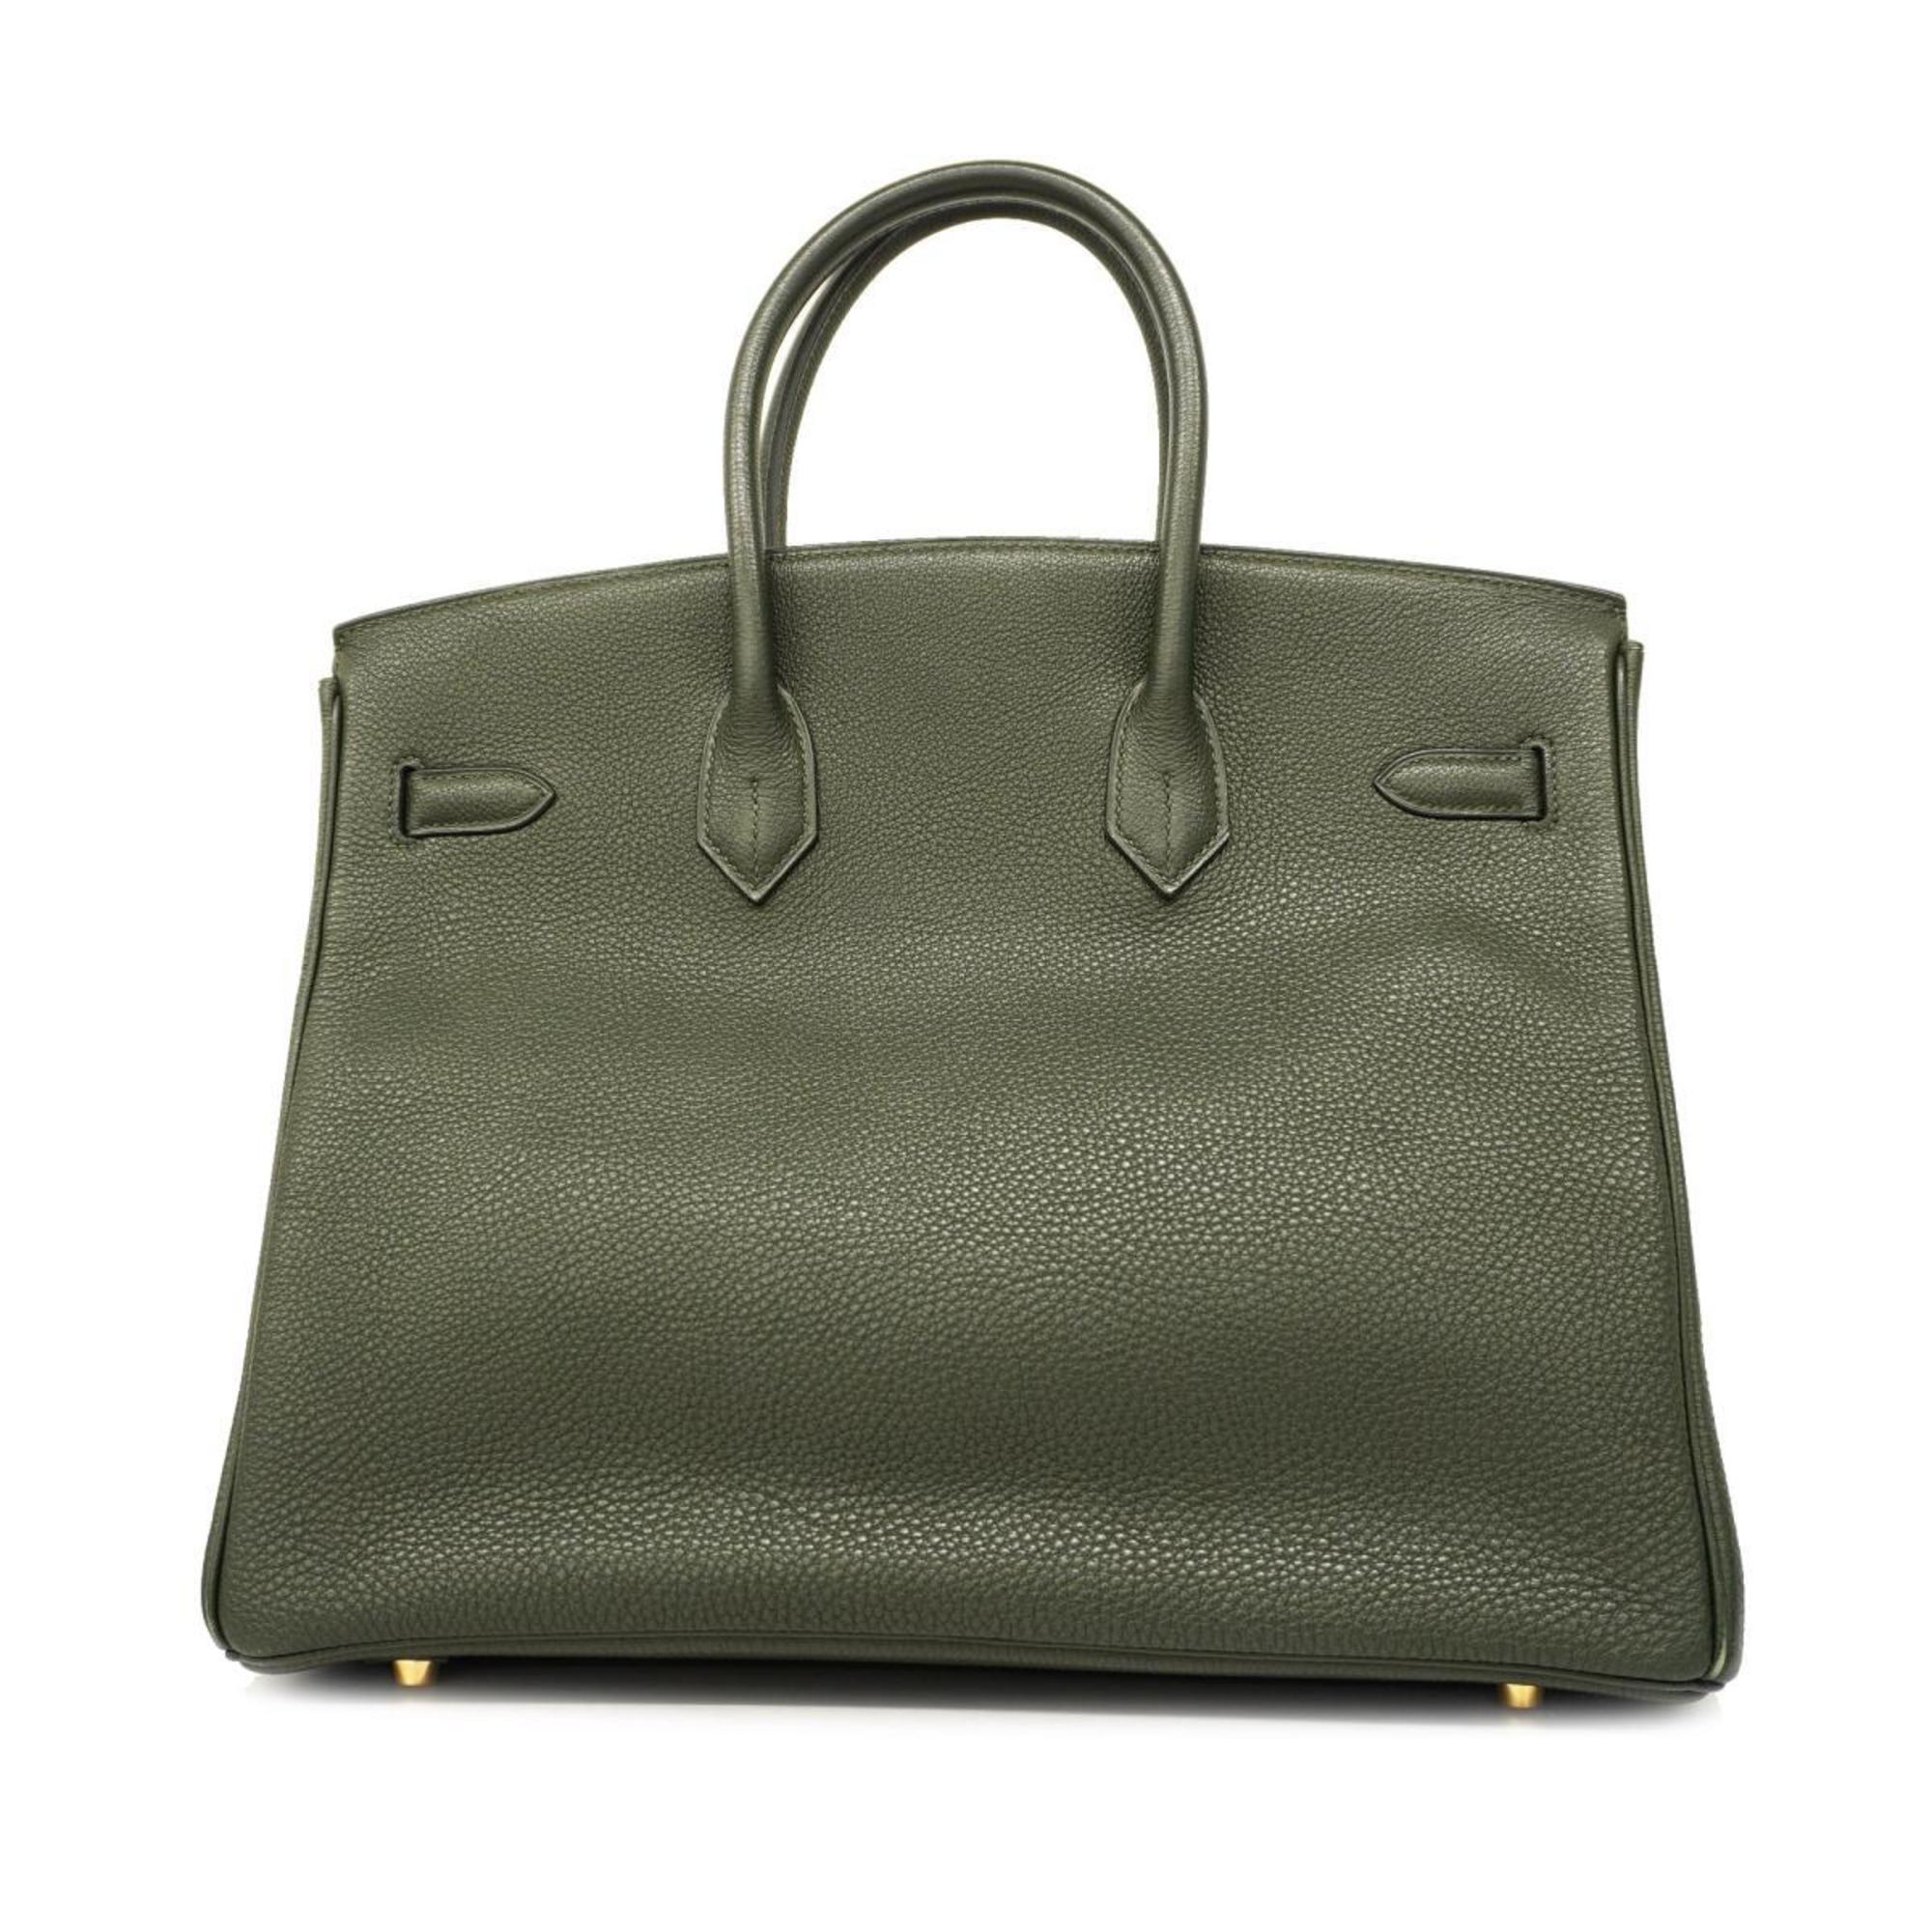 Hermes Handbag Birkin 35 □H Stamp Togo Green Ladies